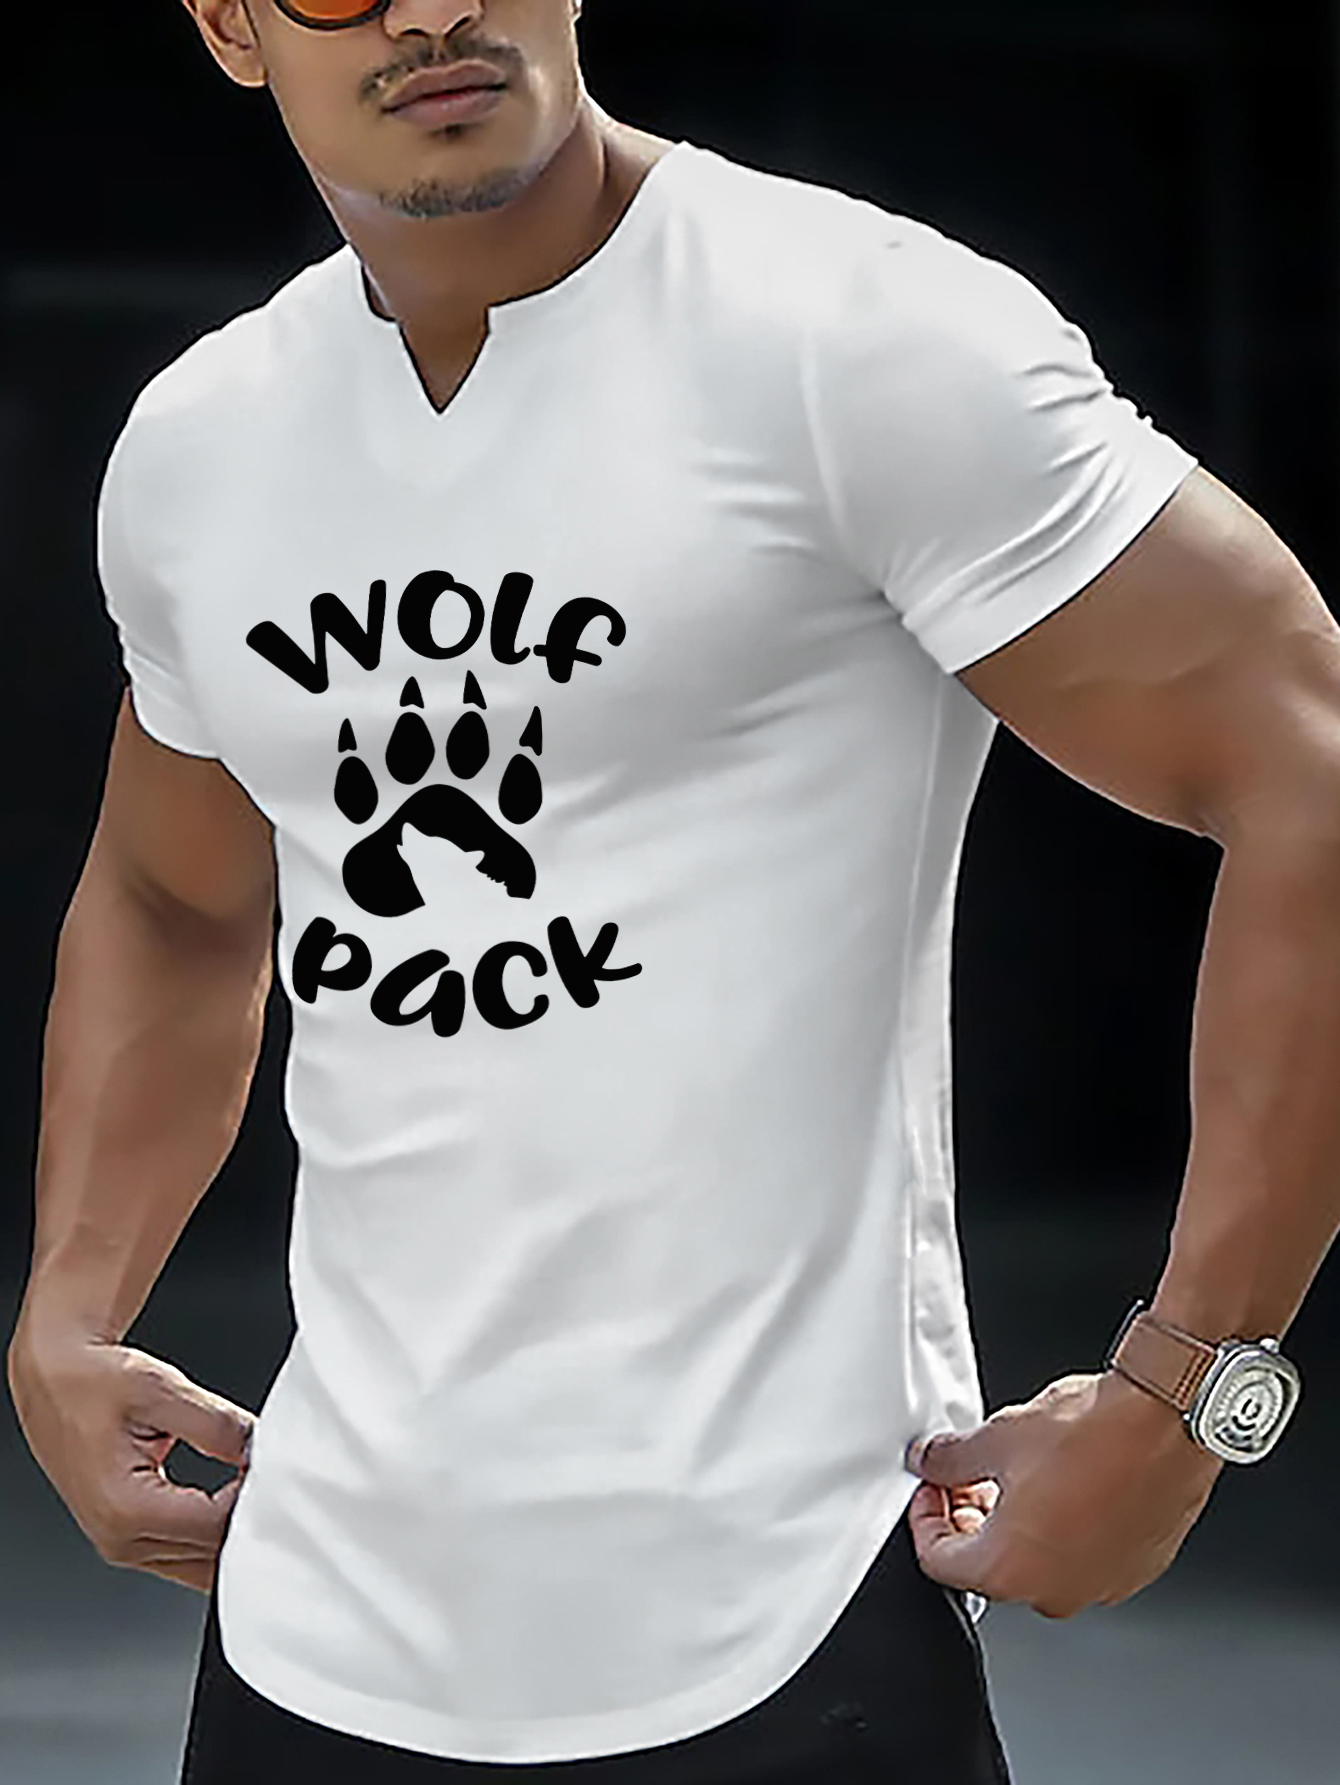 Men's Training Pants Wolf - Torsa